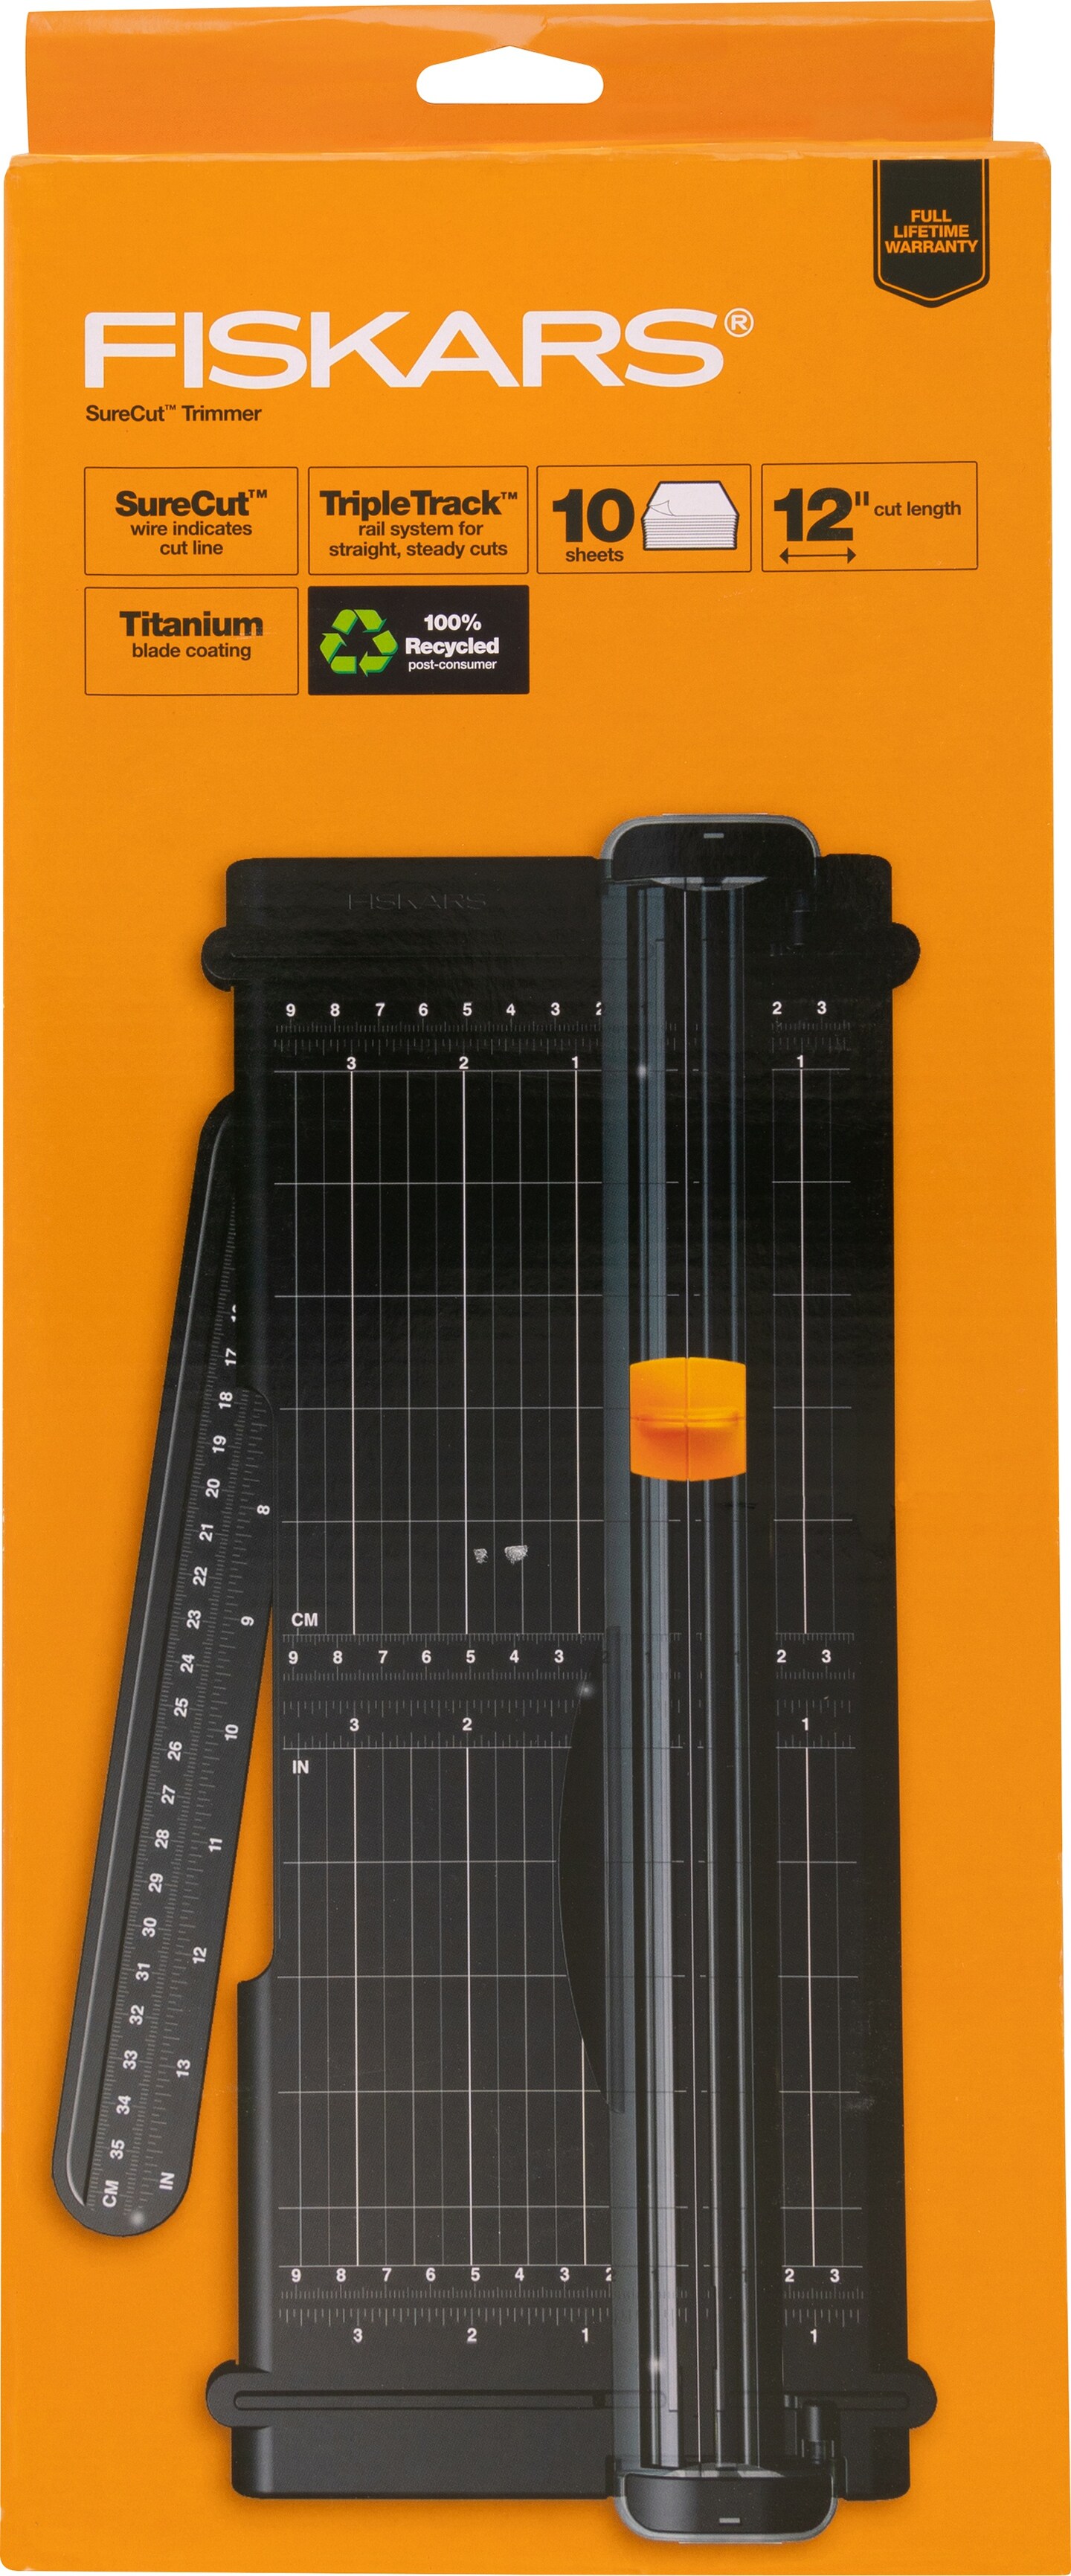 Fiskars SureCut Paper Trimmer 12” Cut Length Portable Swing-Out